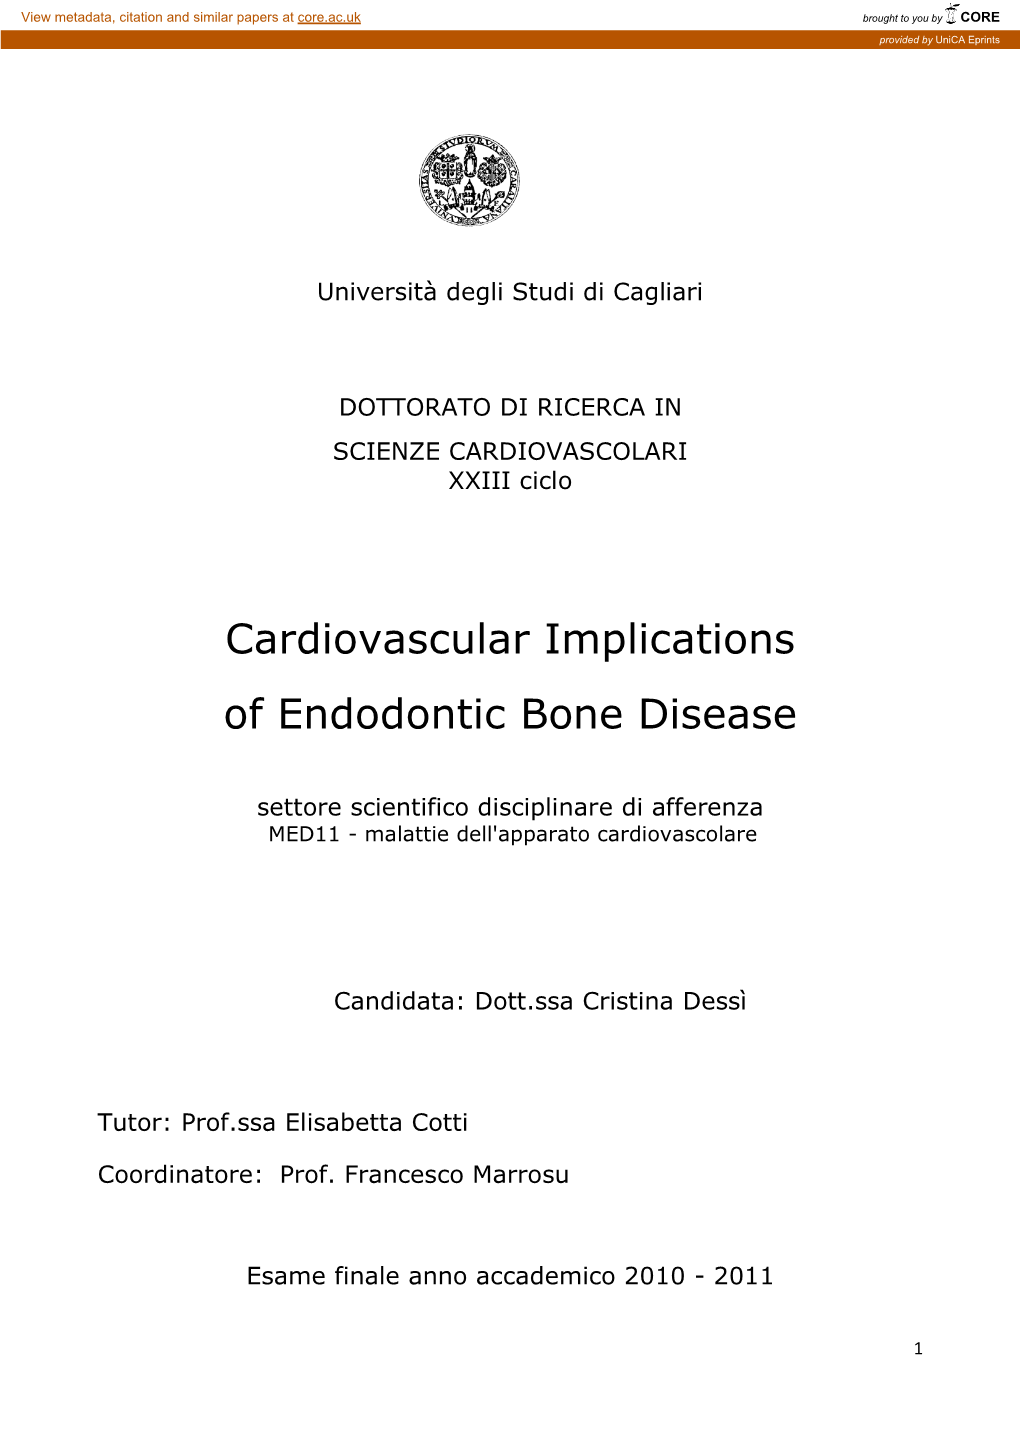 Cardiovascular Implications of Endodontic Bone Disease